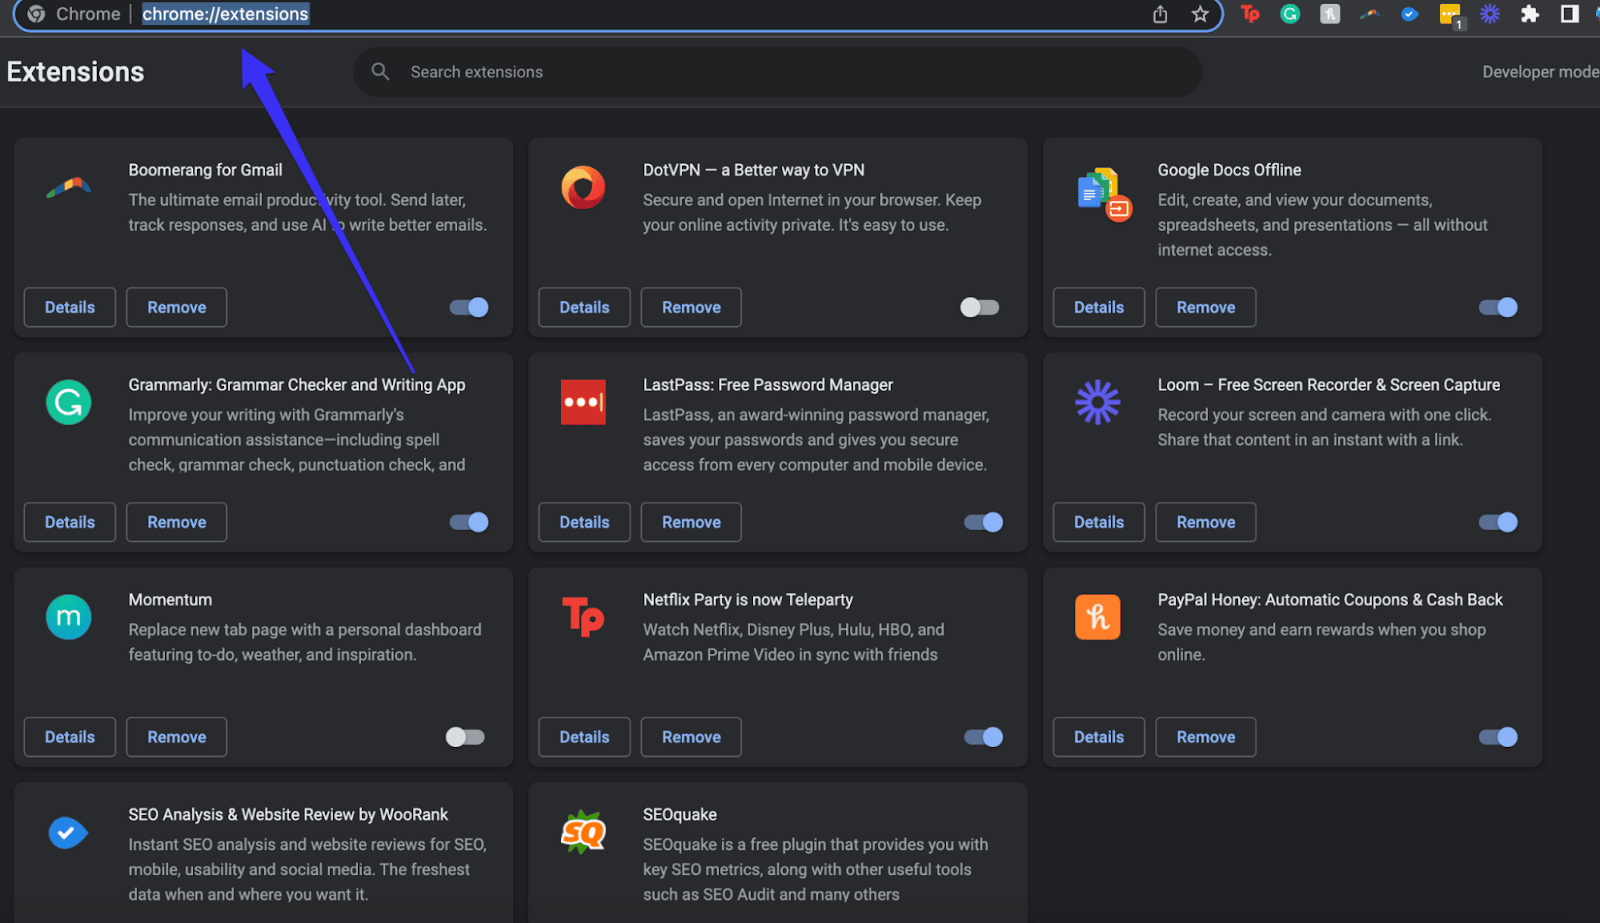 The Chrome extensions hub